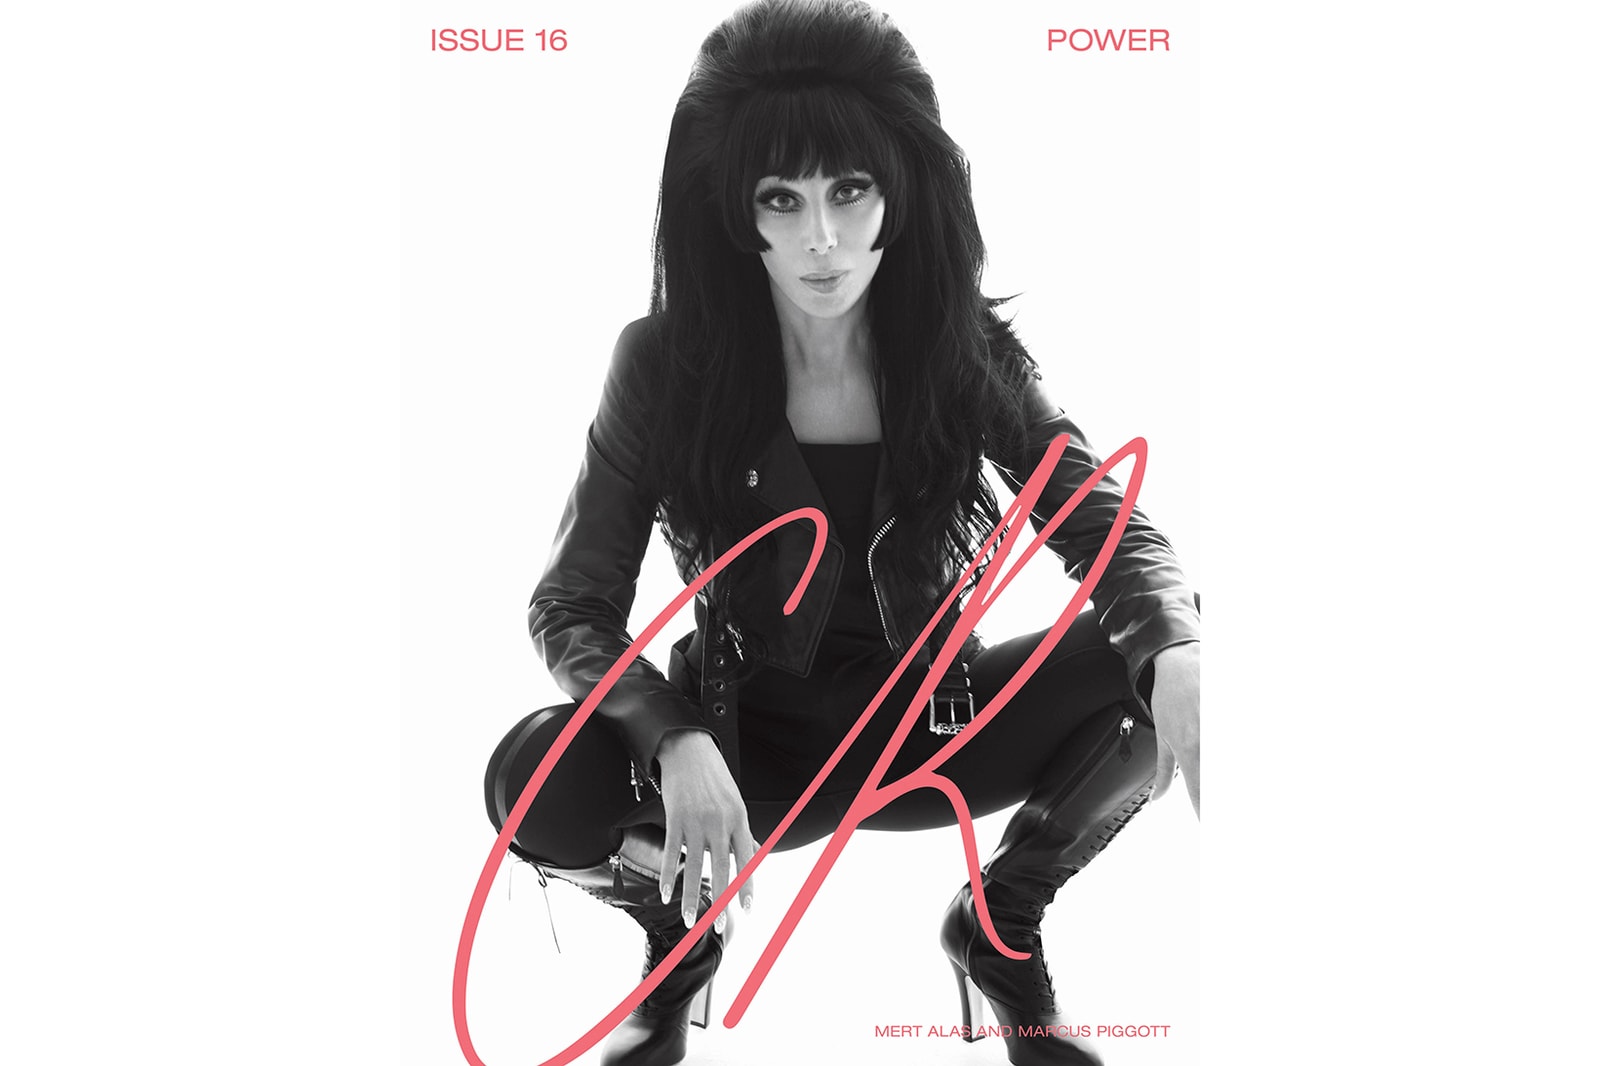  Kim Kardashian Cher CR Fashion Book Power Issue 16